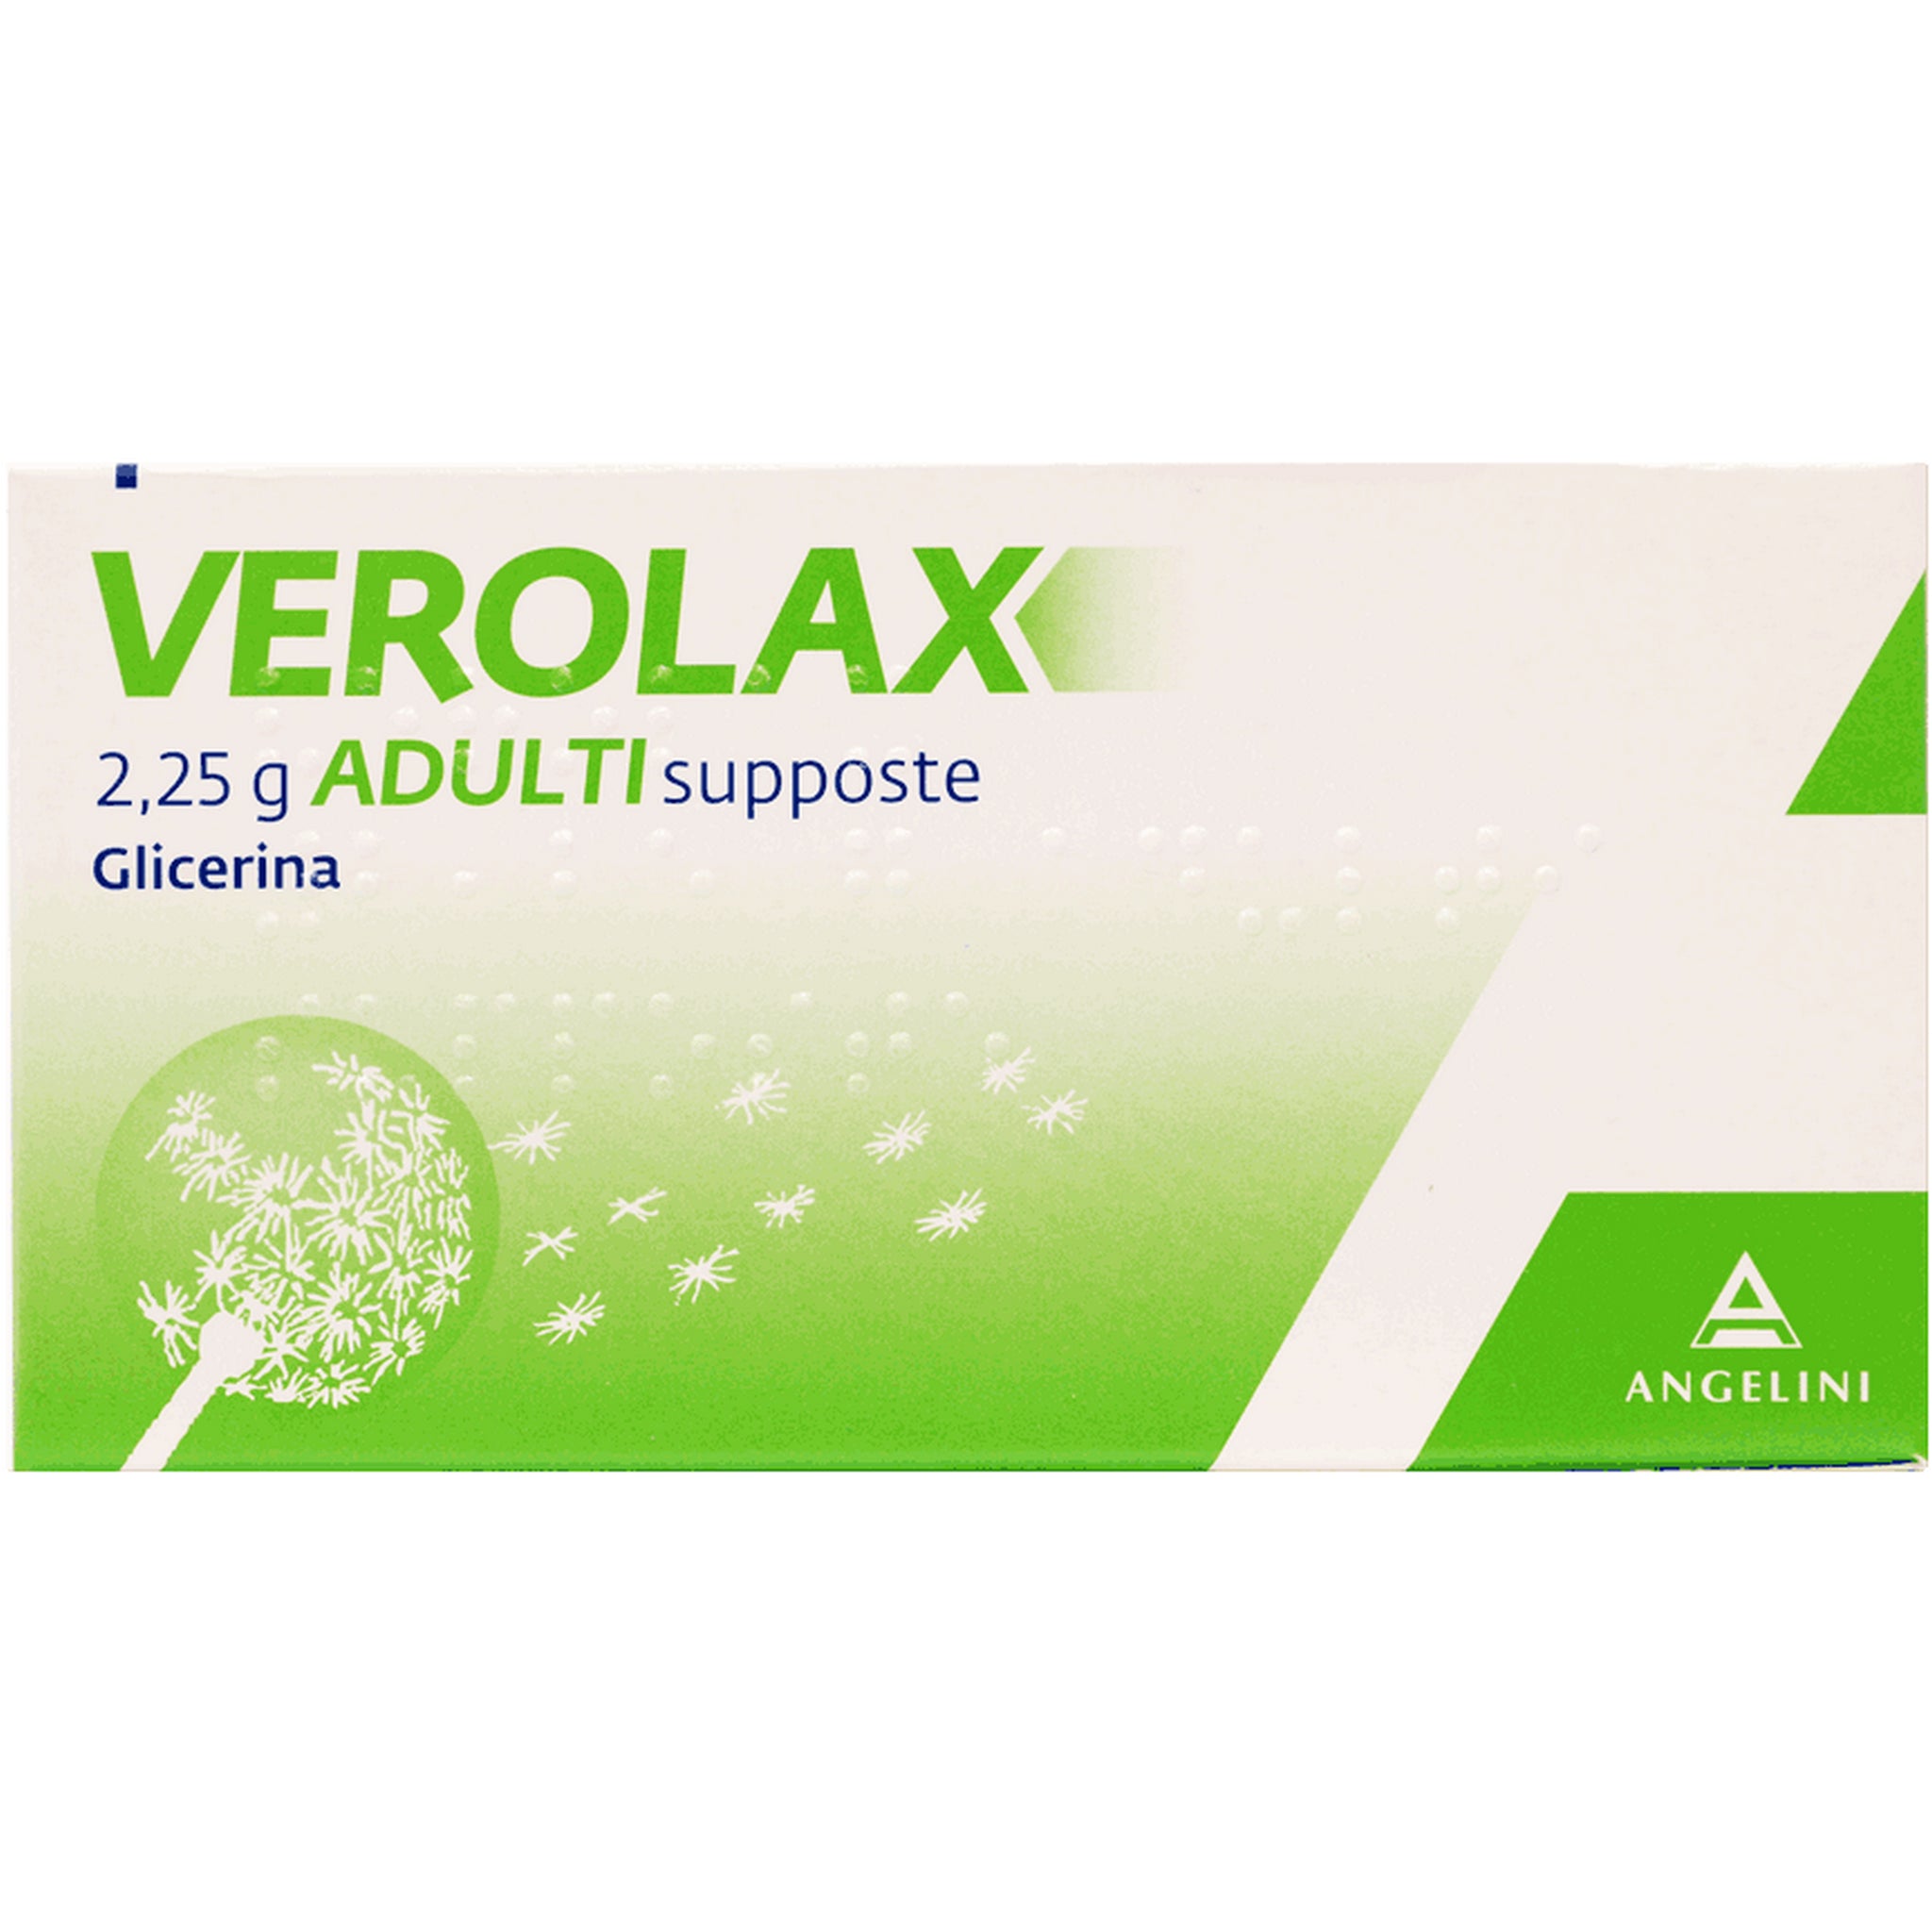 Verolax Adulti 18 Supposte 2,25g